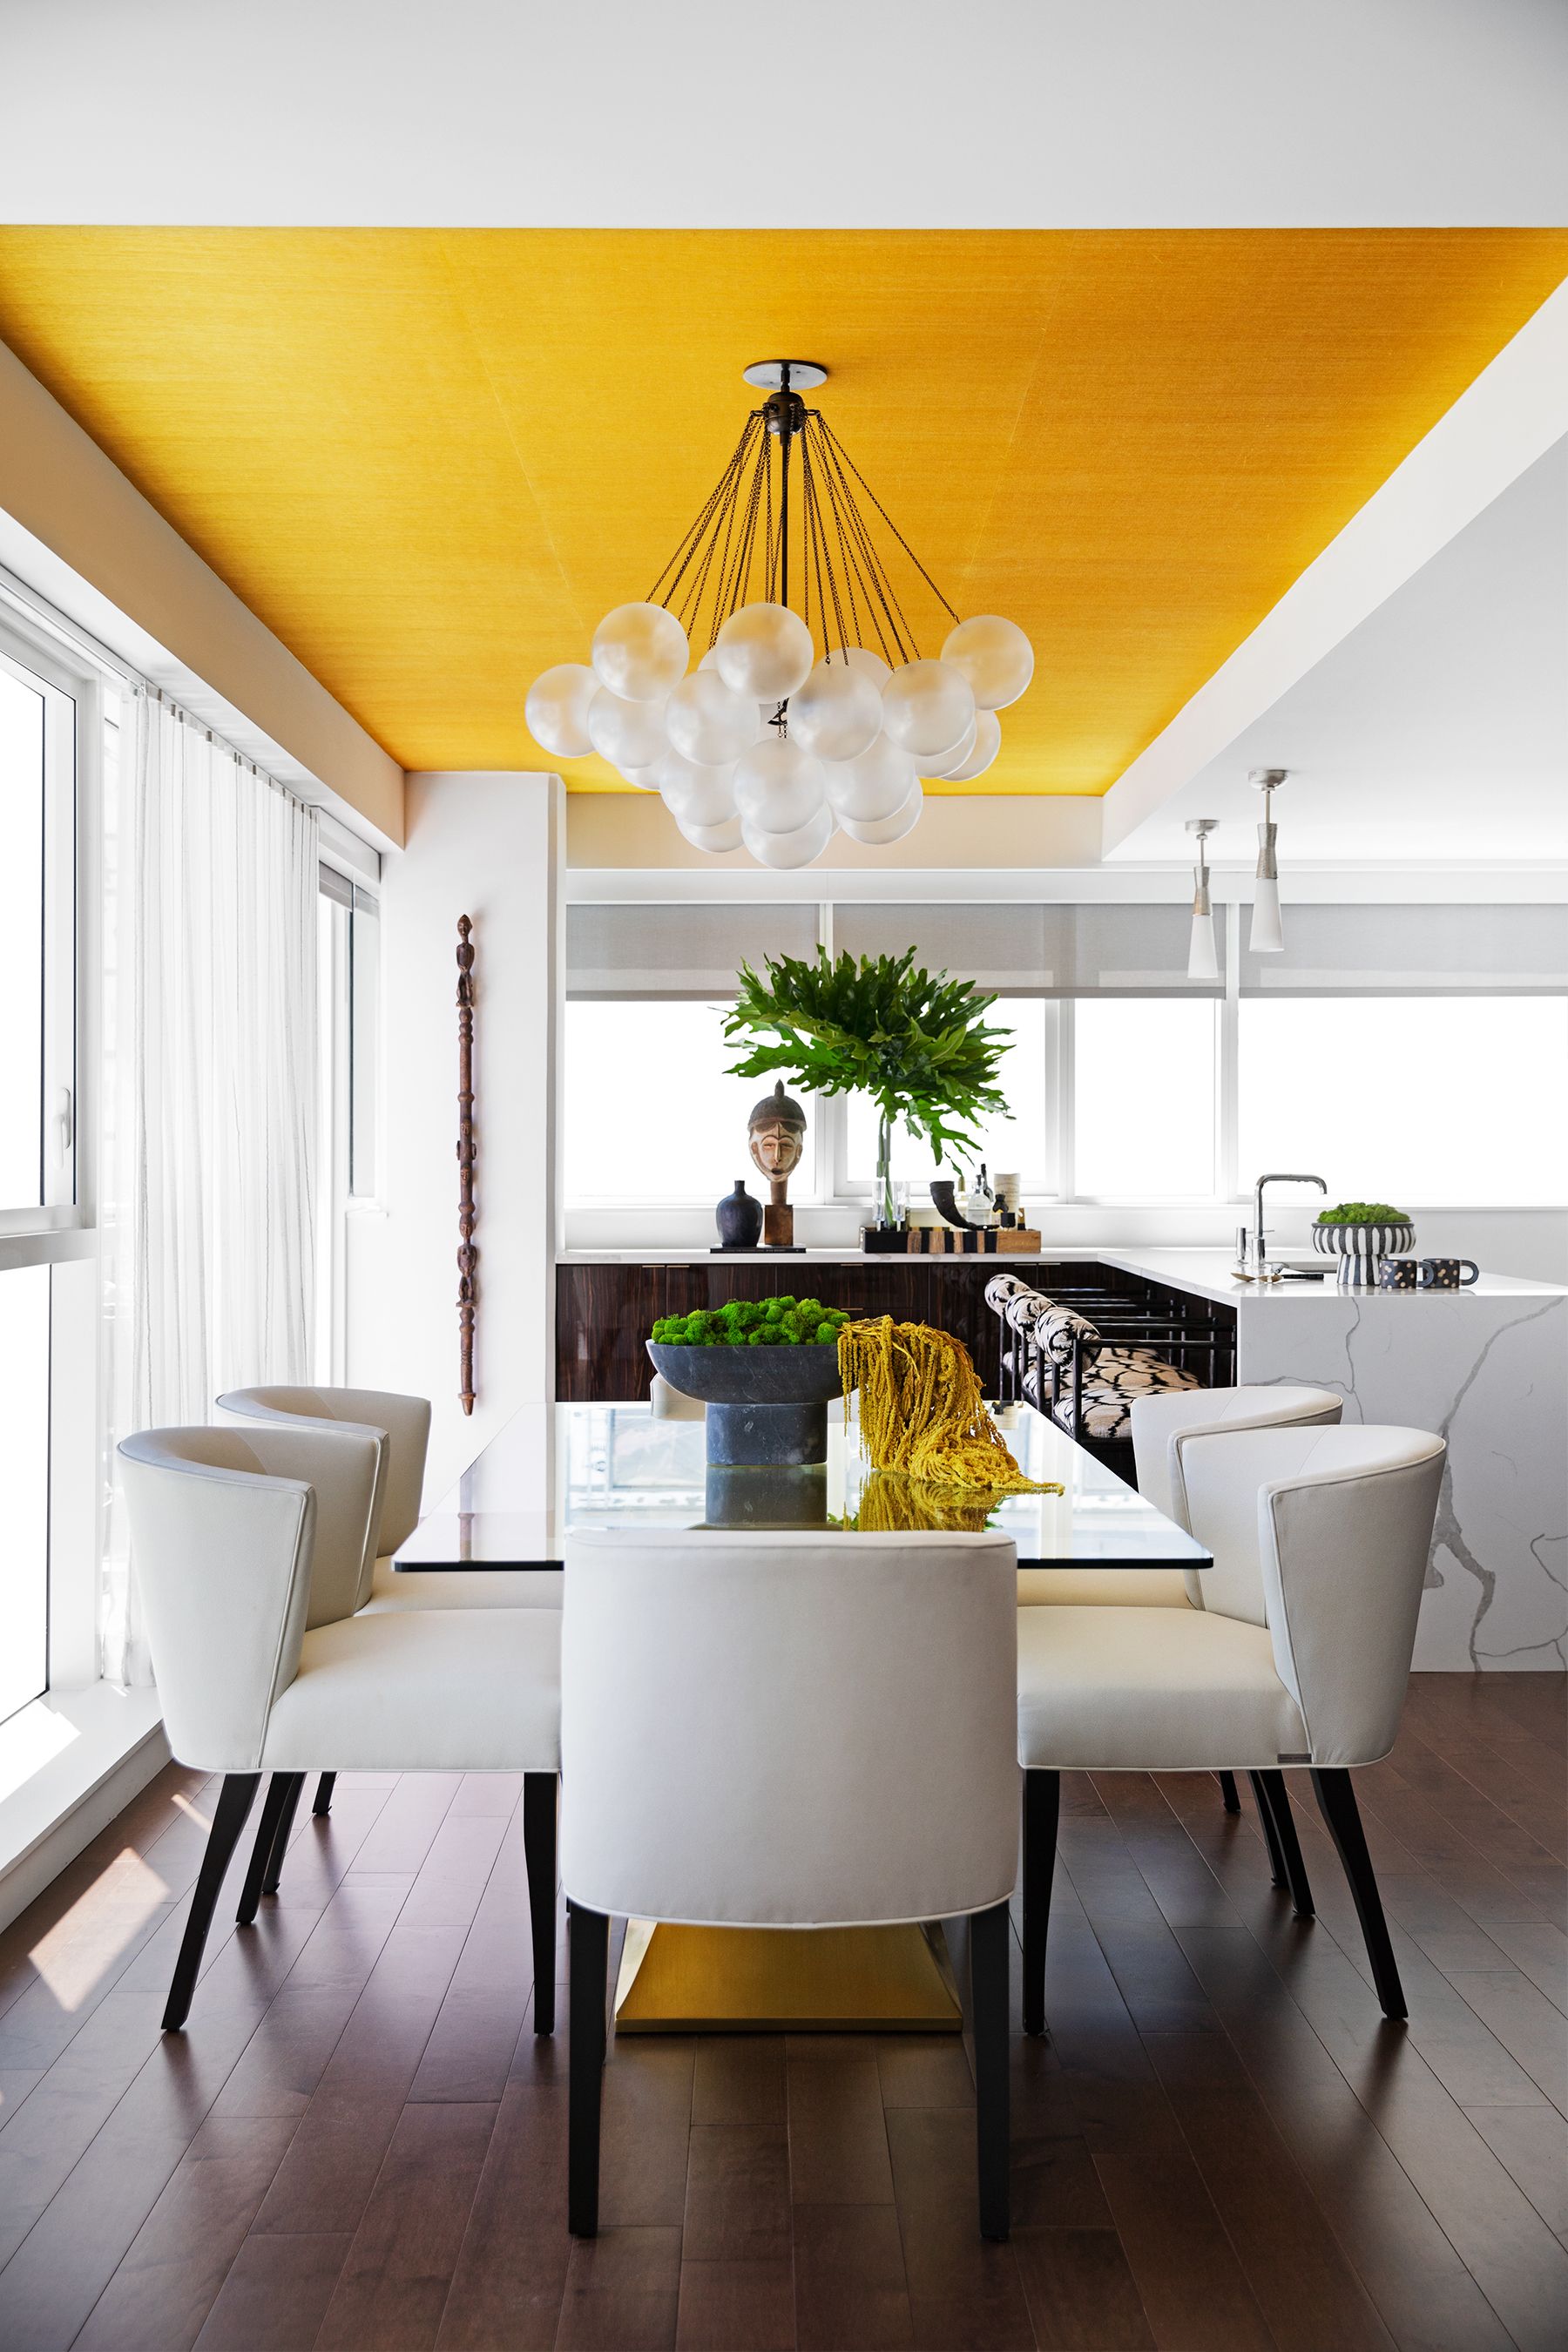 contemporary dining room design ideas